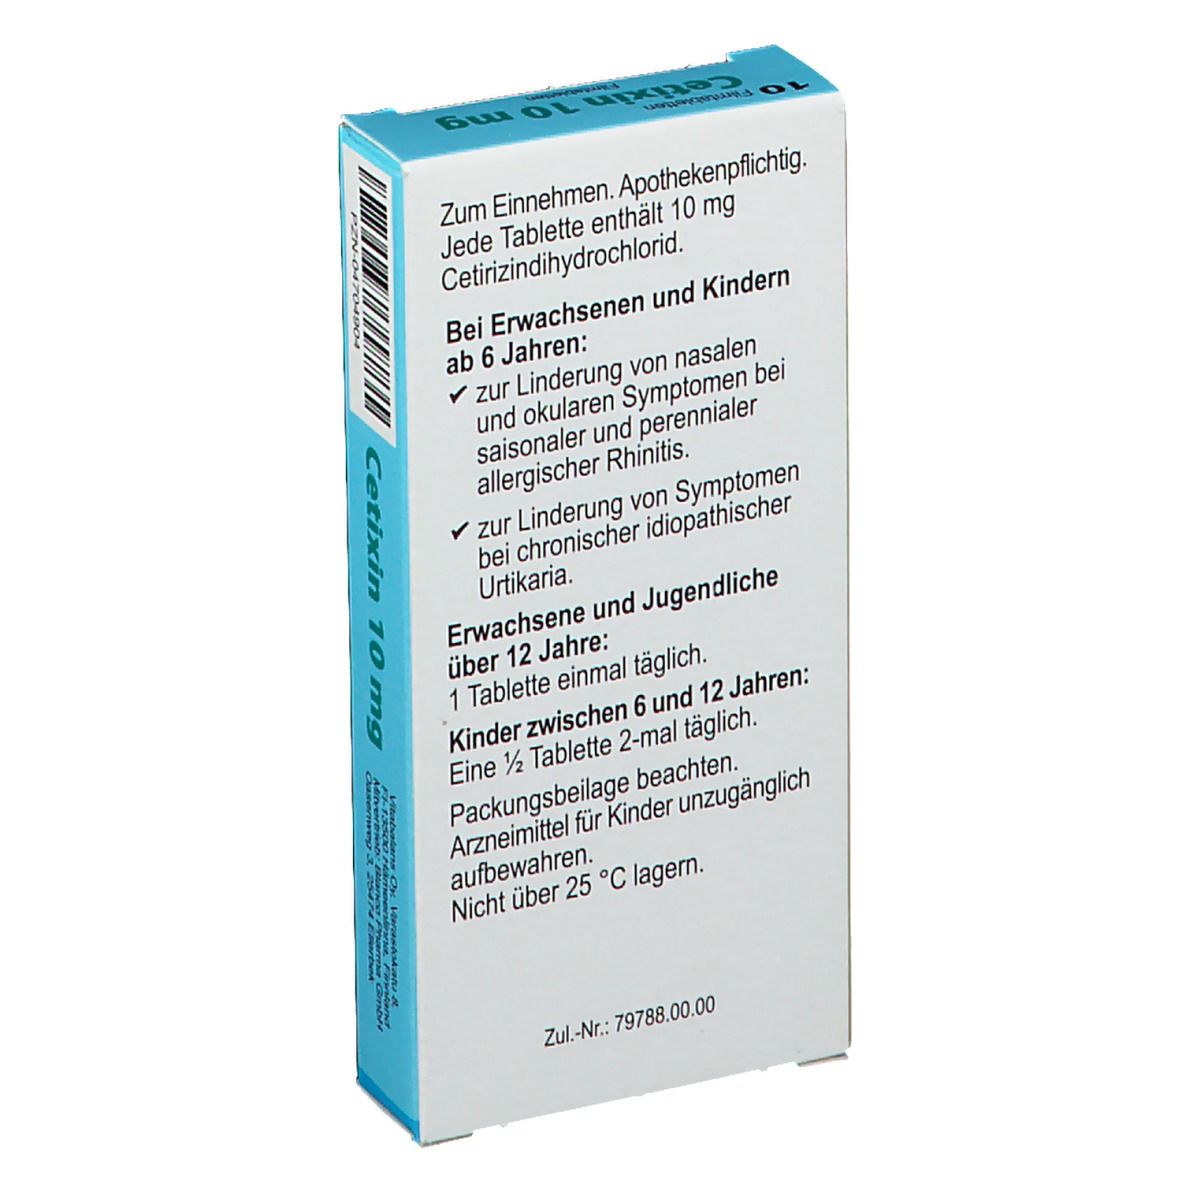 Cetixin 10 mg